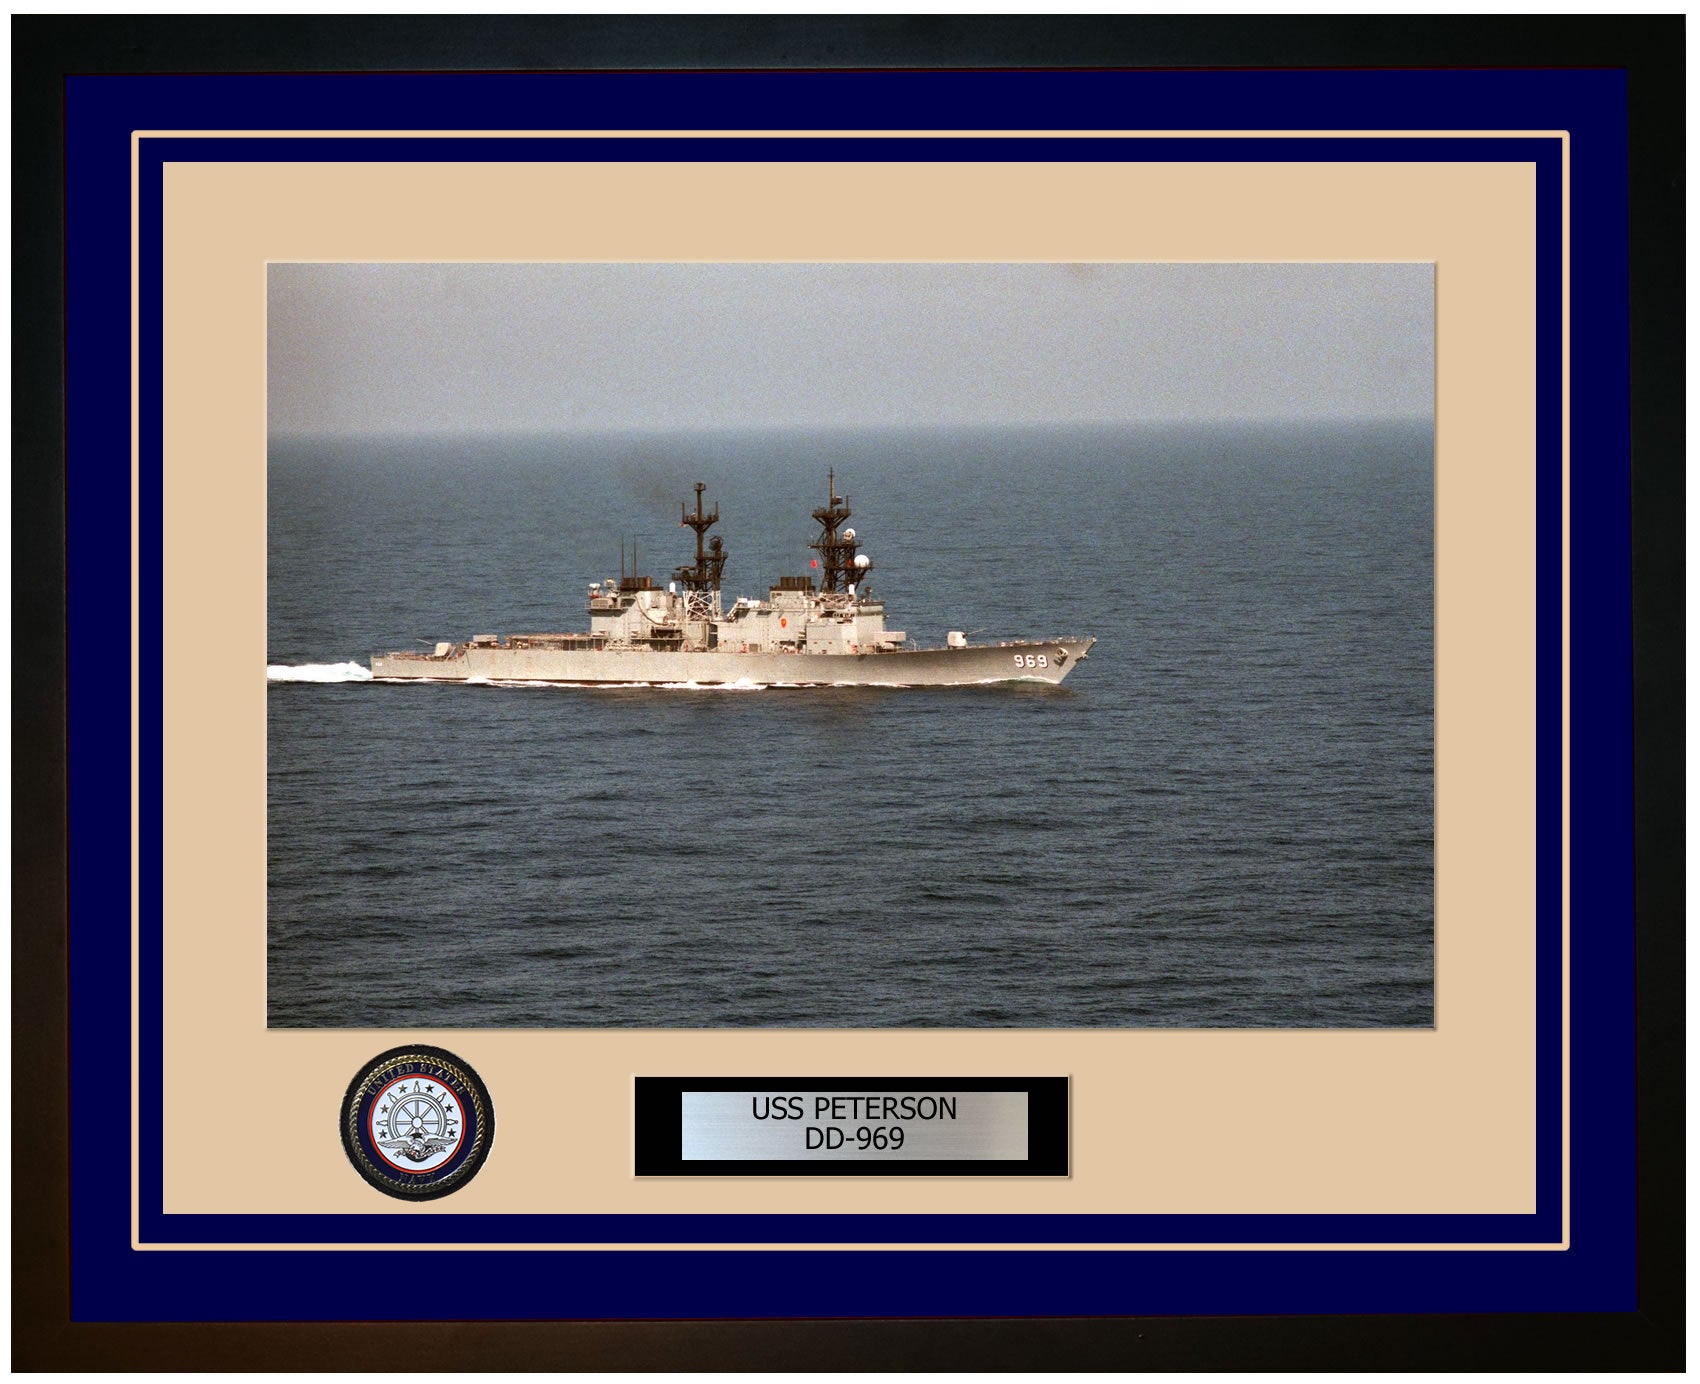 USS PETERSON DD-969 Framed Navy Ship Photo Blue